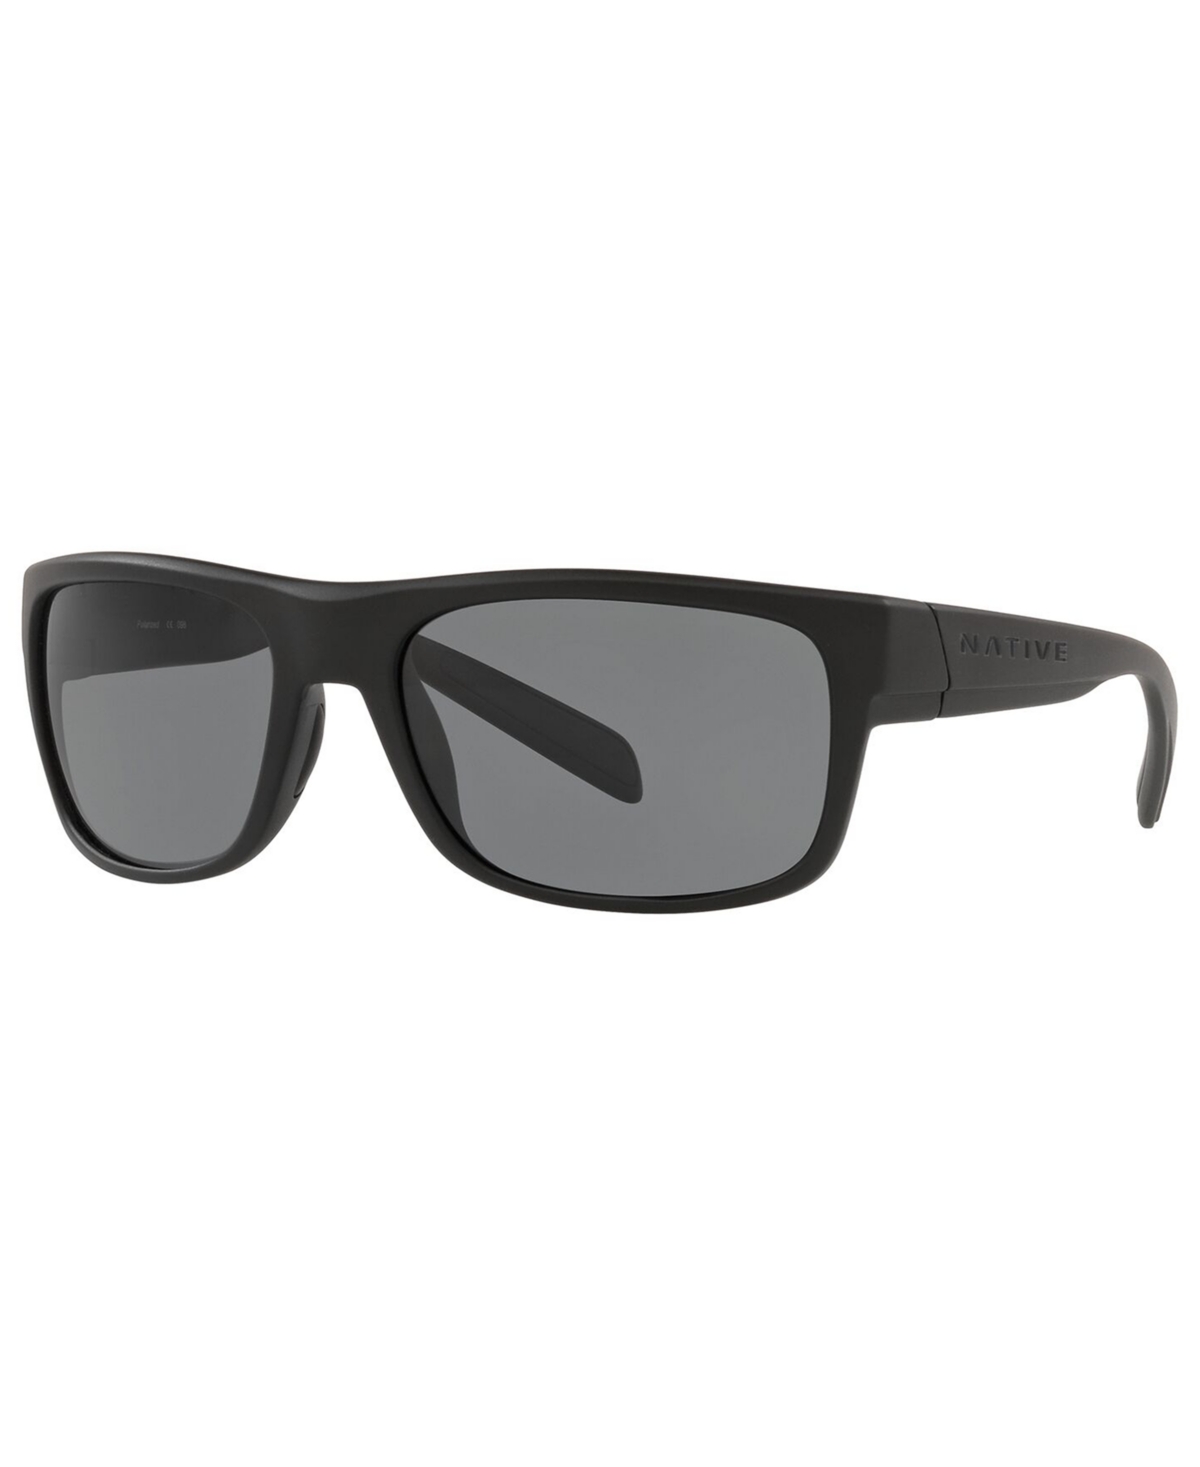 Native Eyewear Native Unisex Polarized Sunglasses, Xd0065 58 In Matte Black,grey